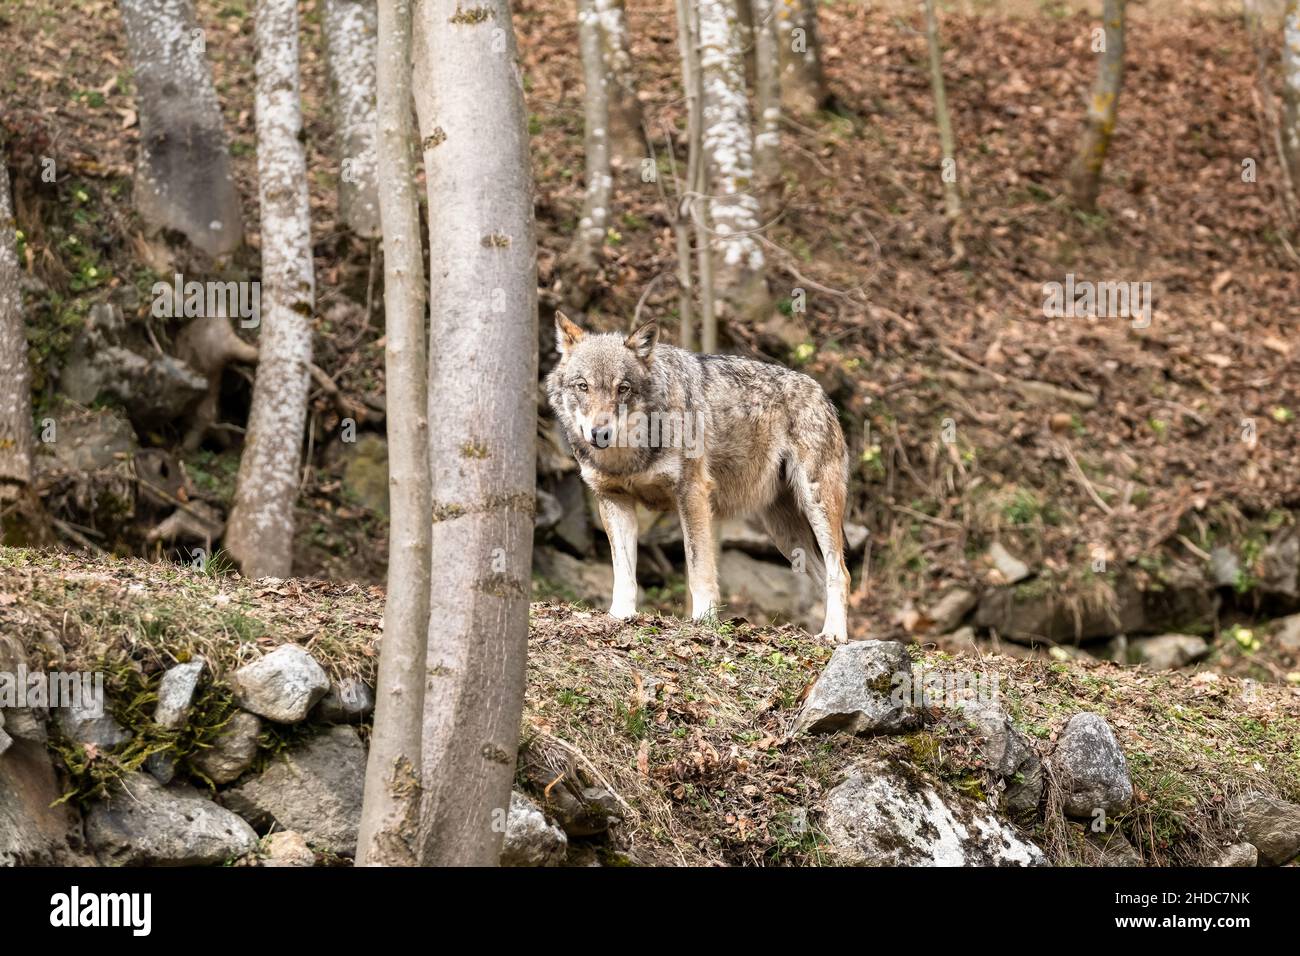 Italian wolf (canis lupus italicus) in wildlife center 'Uomini e lupi' of Entracque, Maritime Alps Park (Piedmont, Italy). Stock Photo